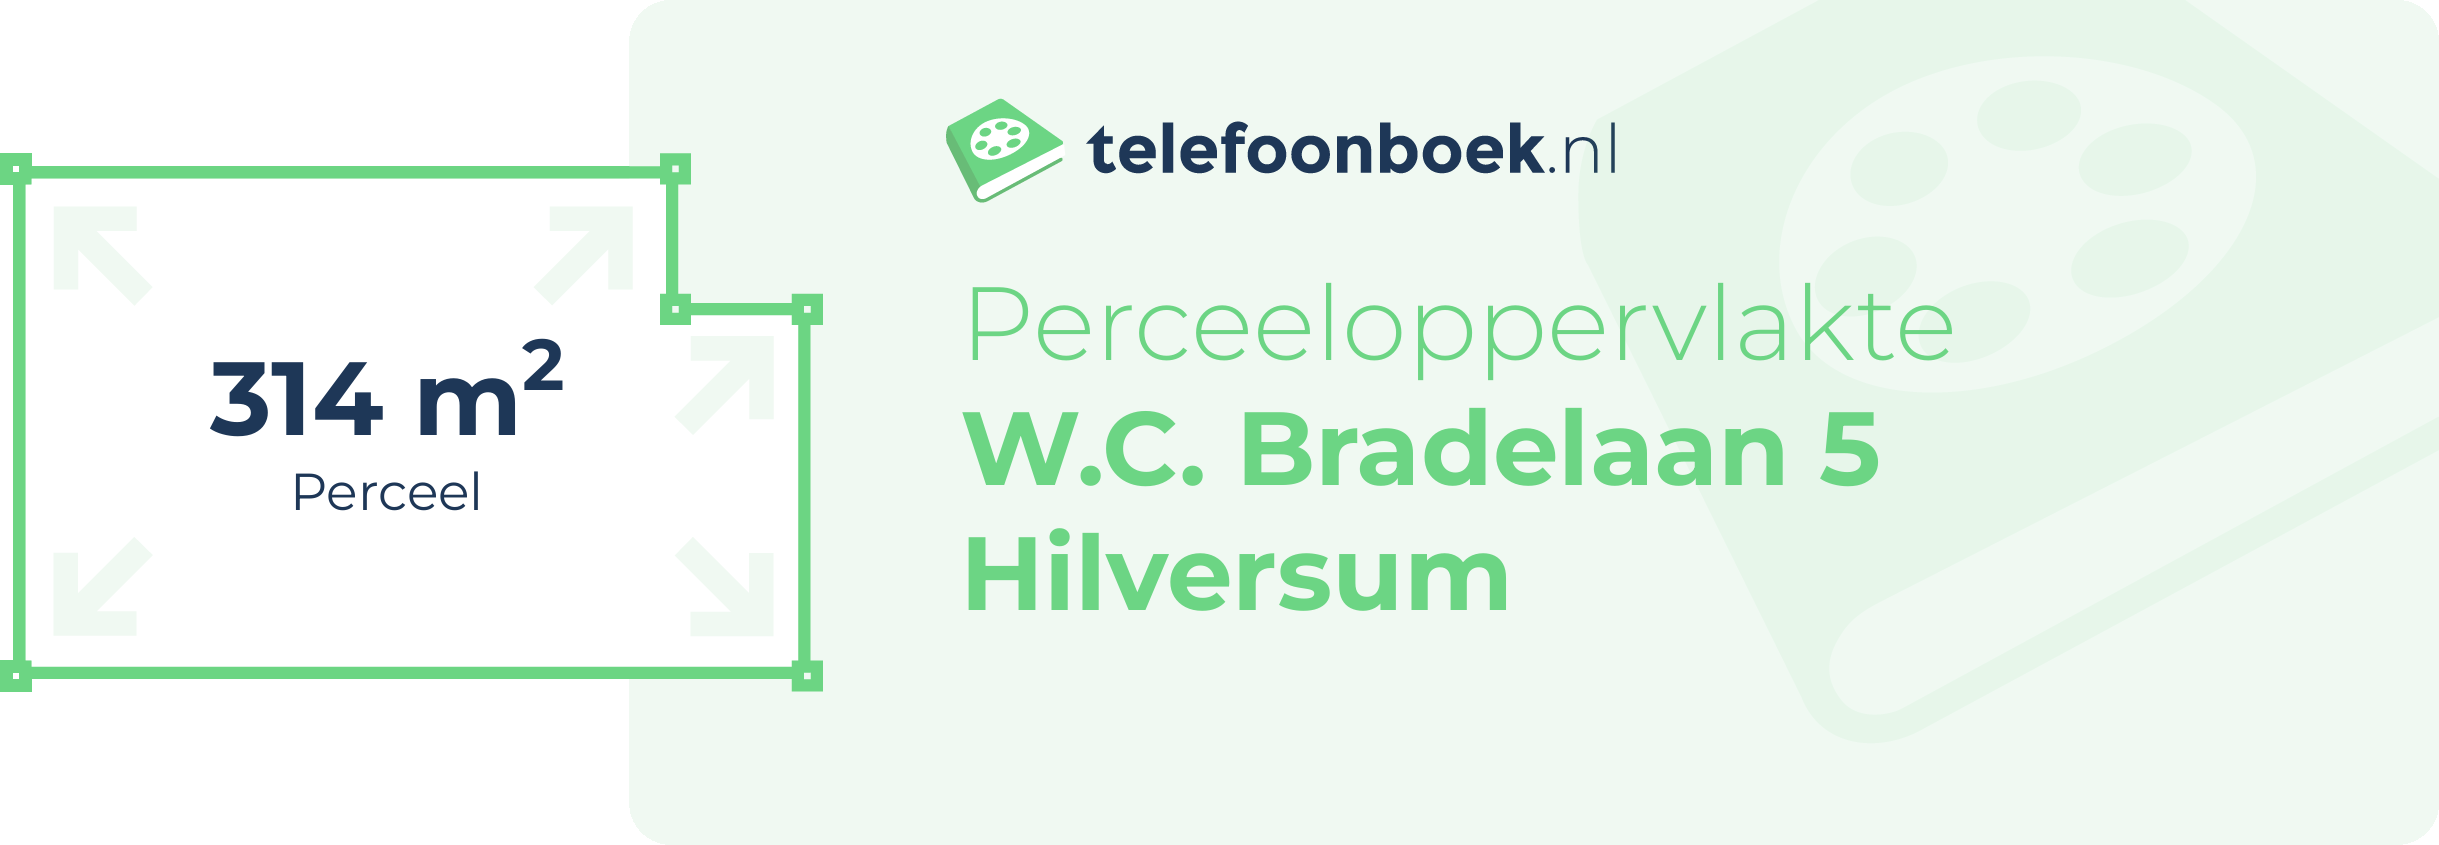 Perceeloppervlakte W.C. Bradelaan 5 Hilversum